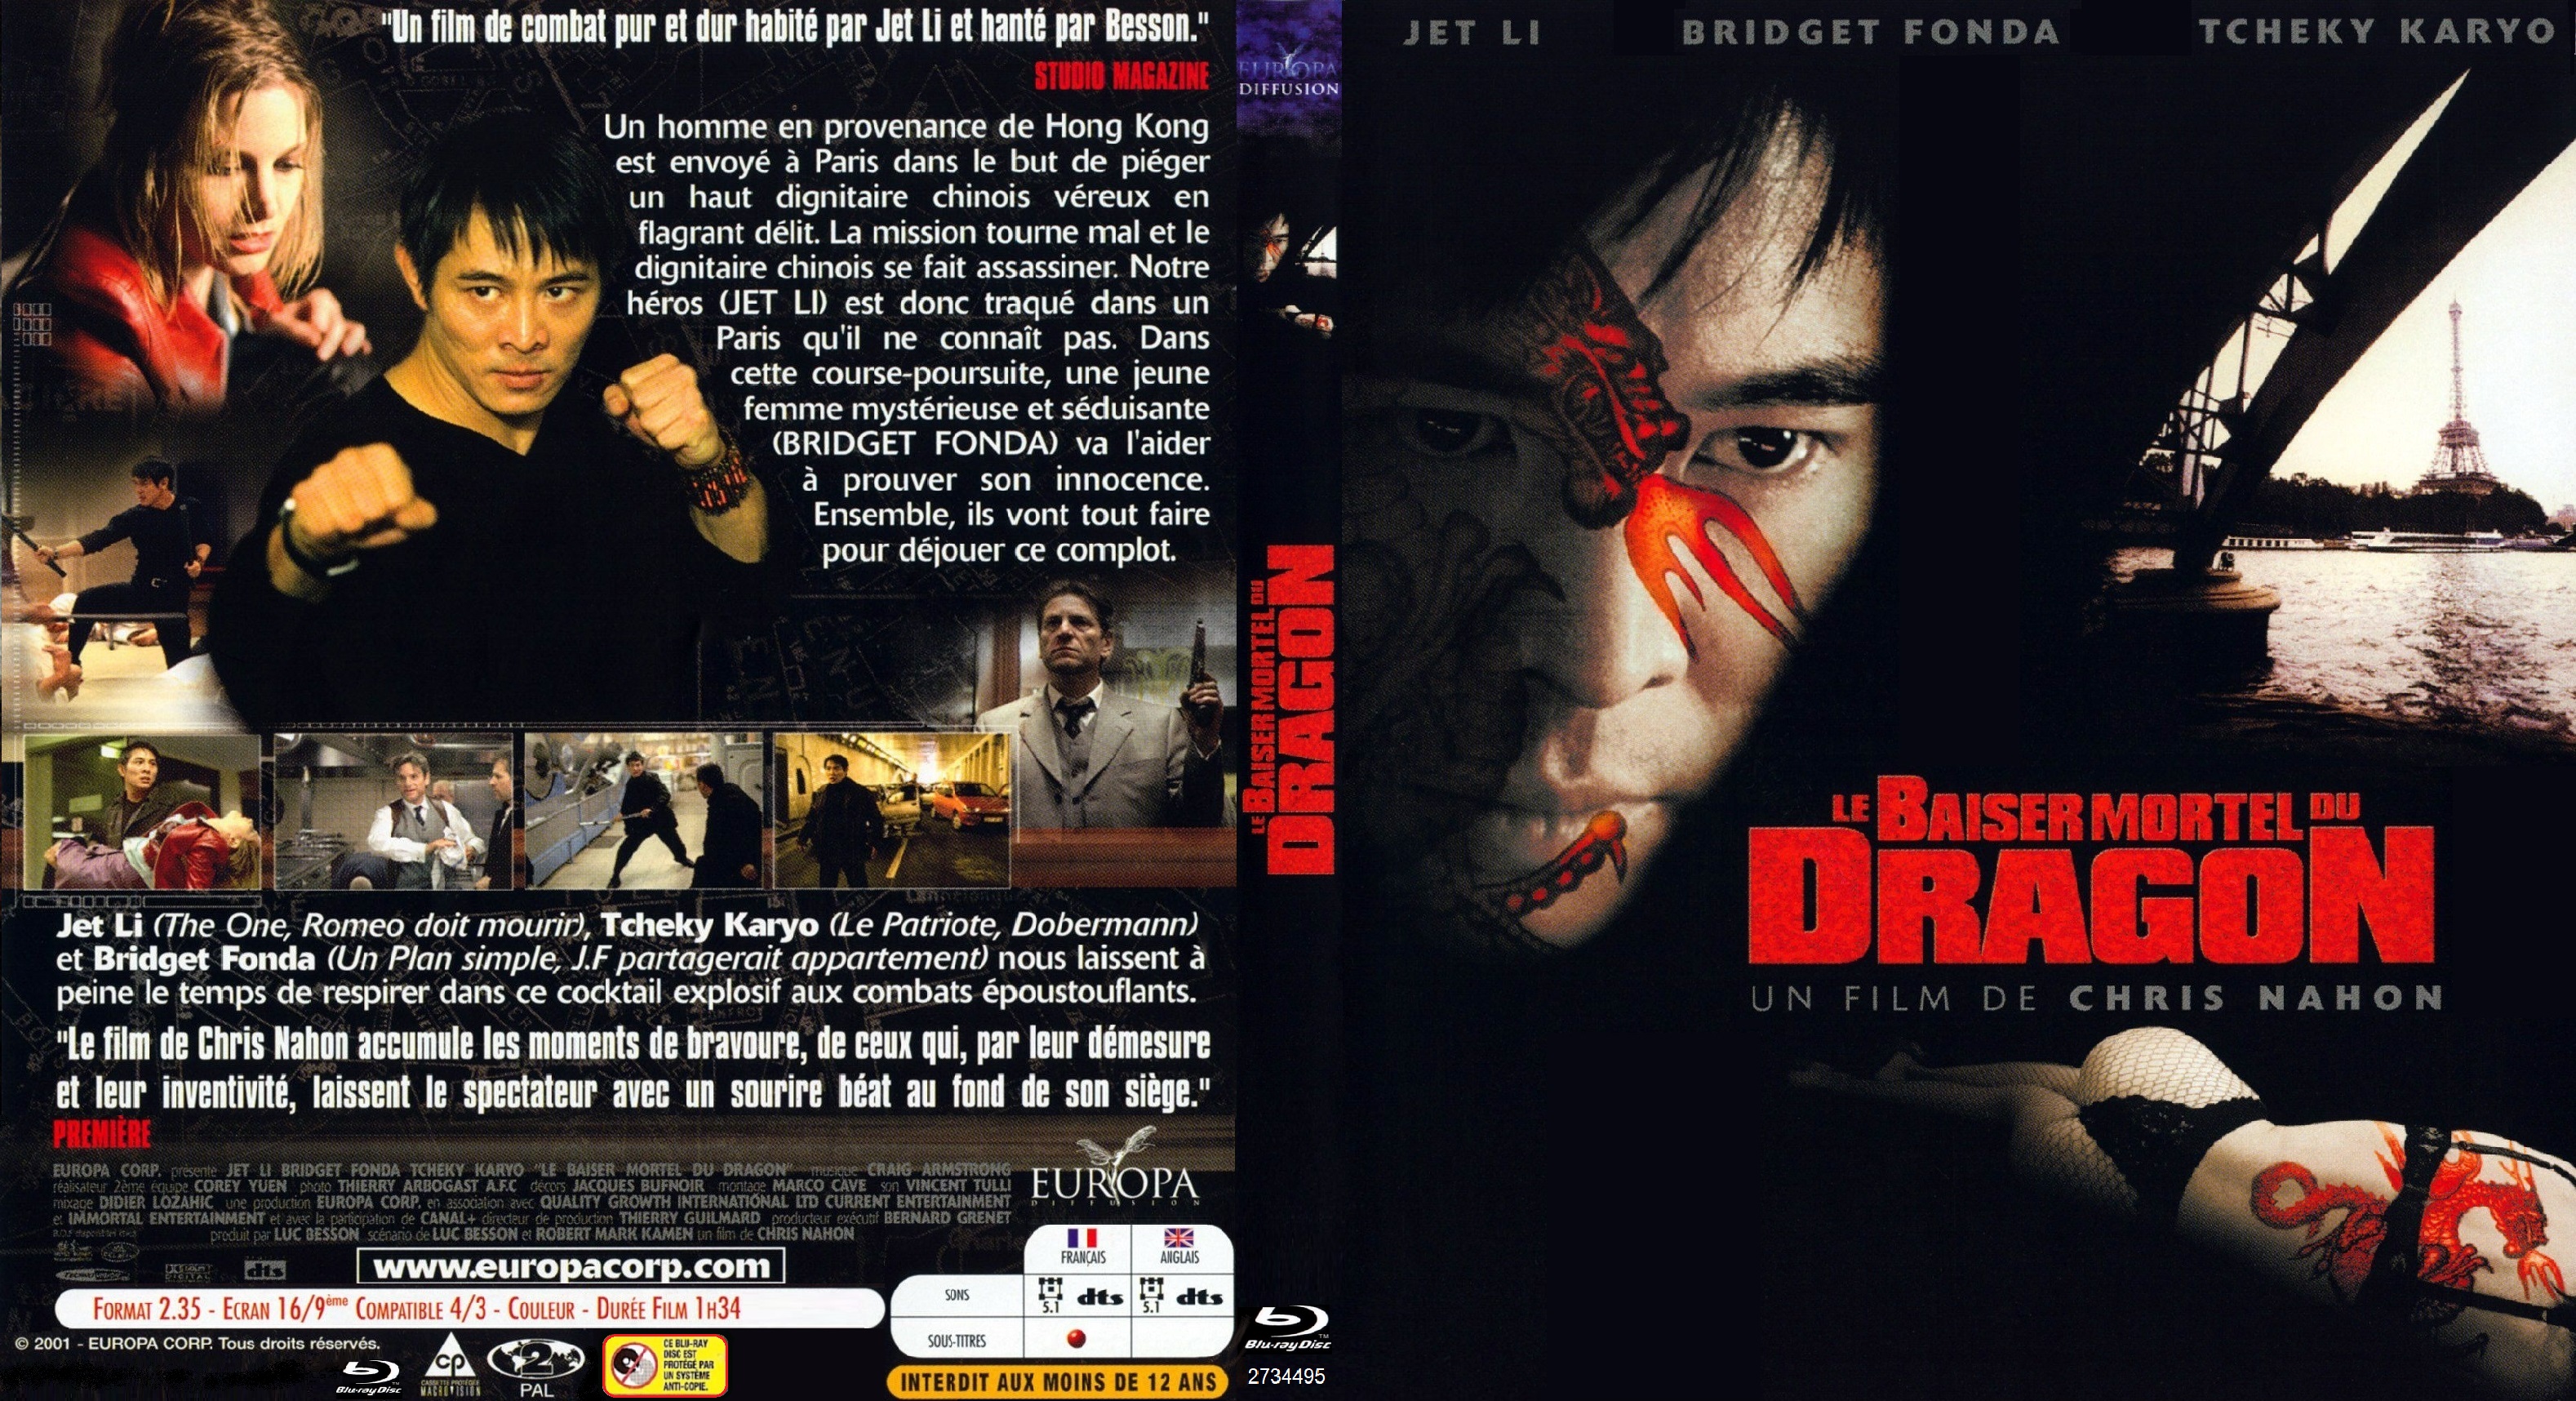 Jaquette DVD Le baiser mortel du dragon custom (BLU-RAY)